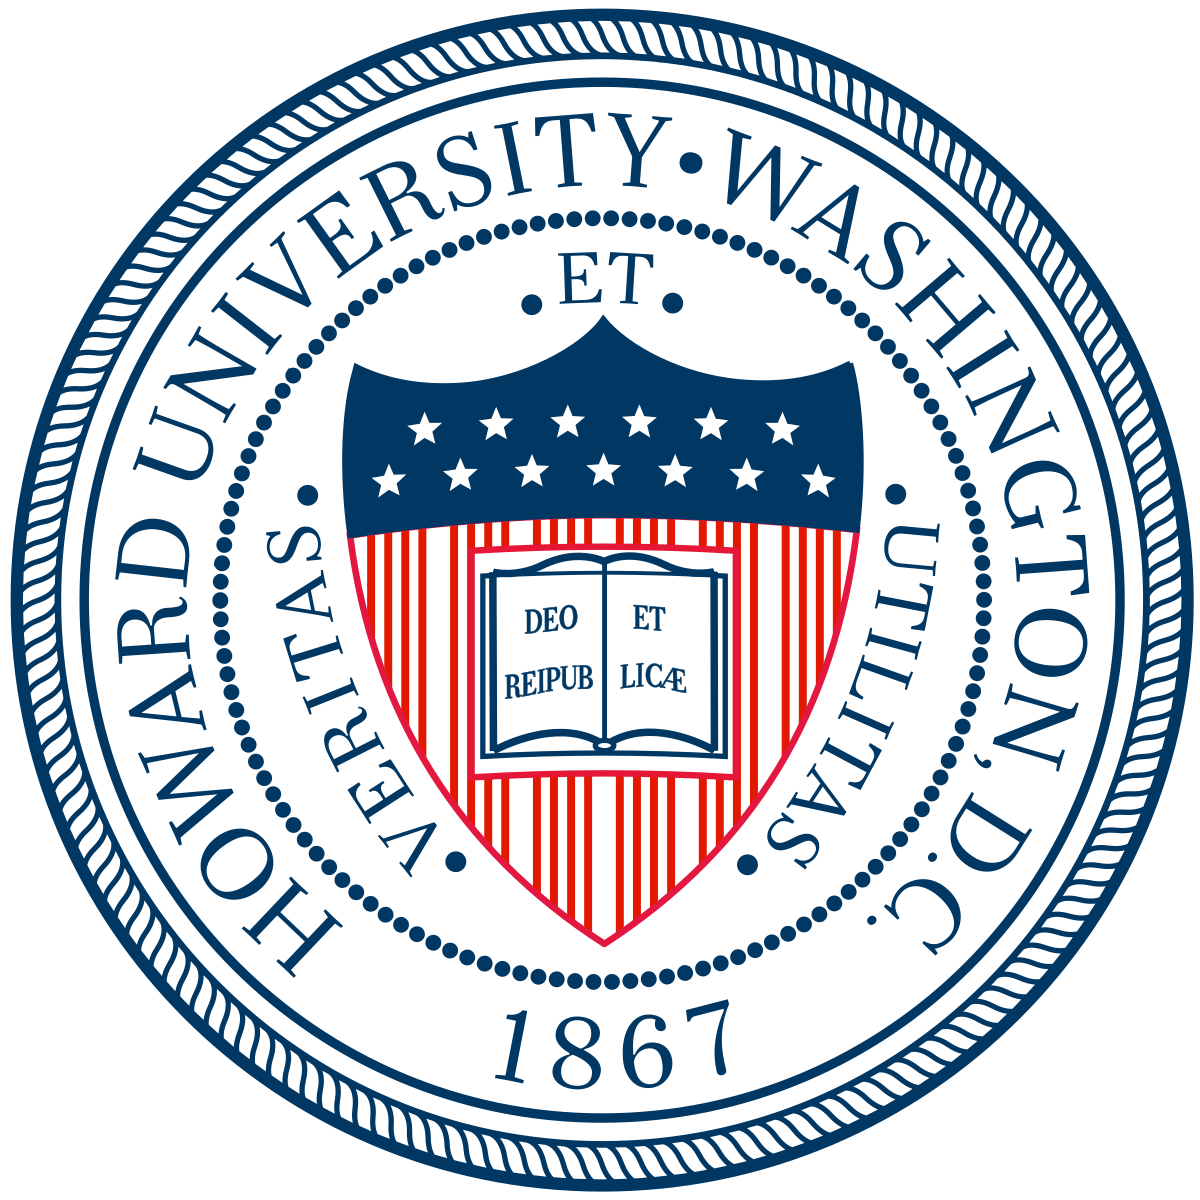 Howard University Logo